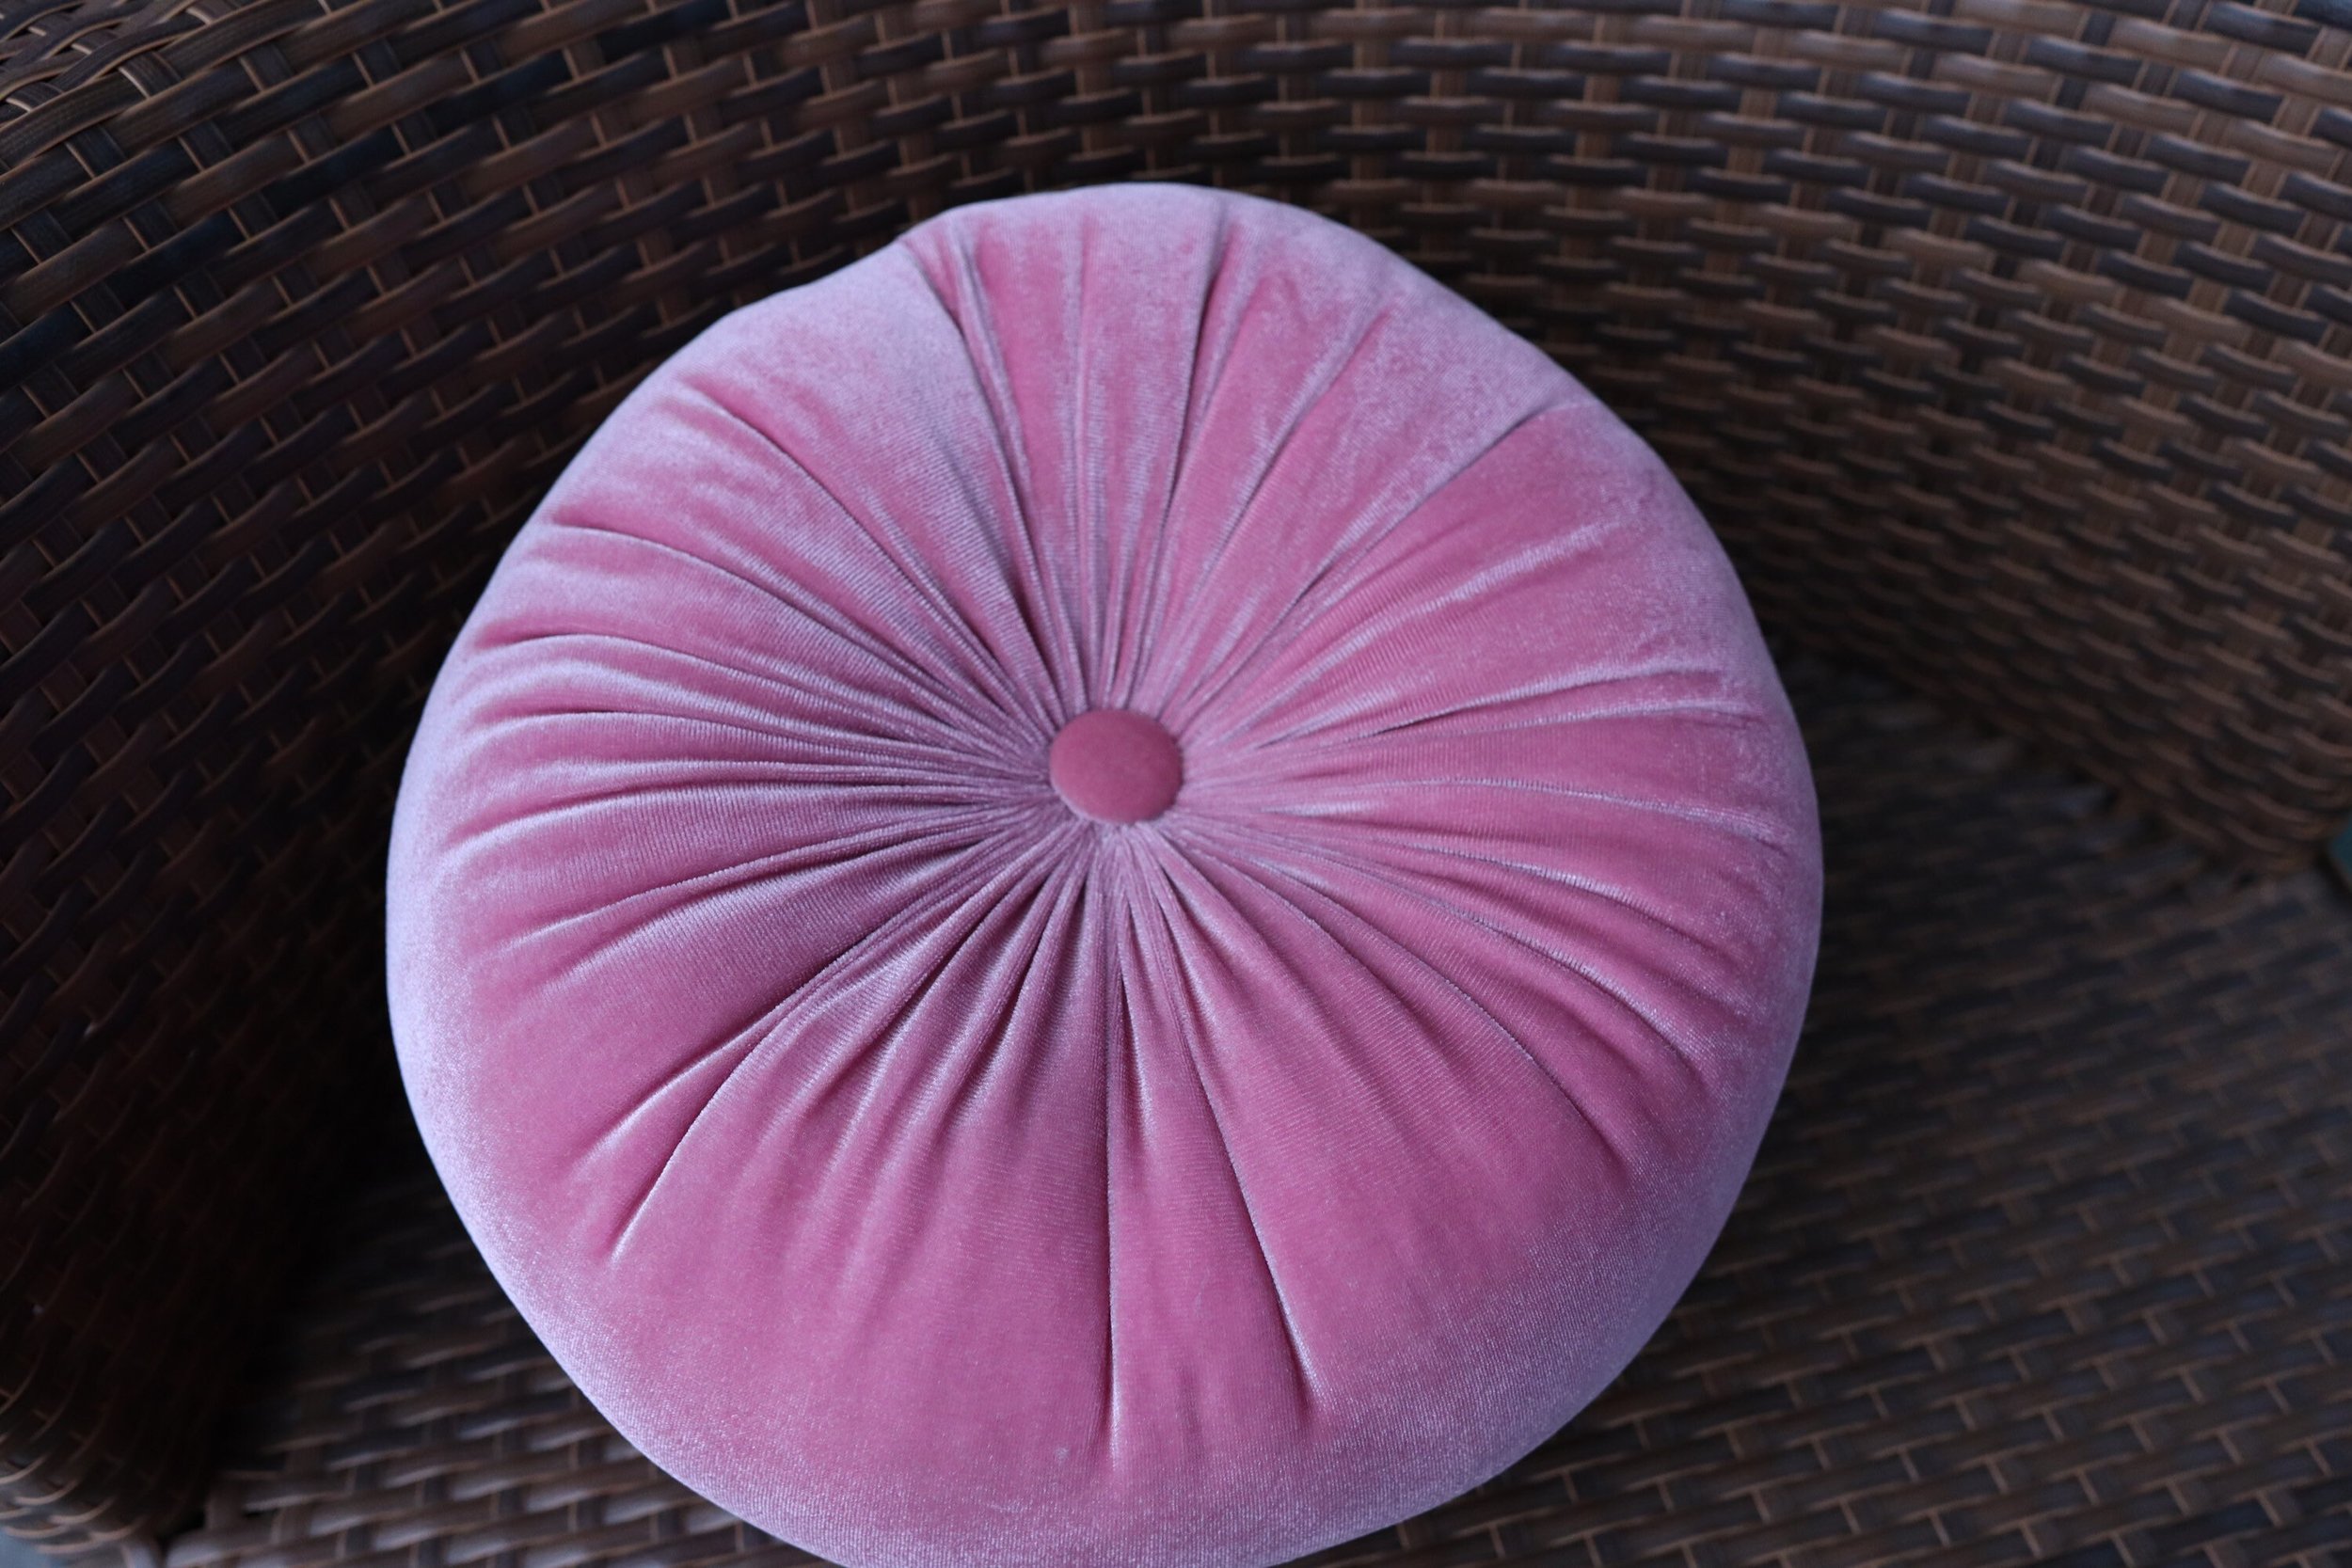 Round Velvet Cushion Ashy purple — PHIONAH